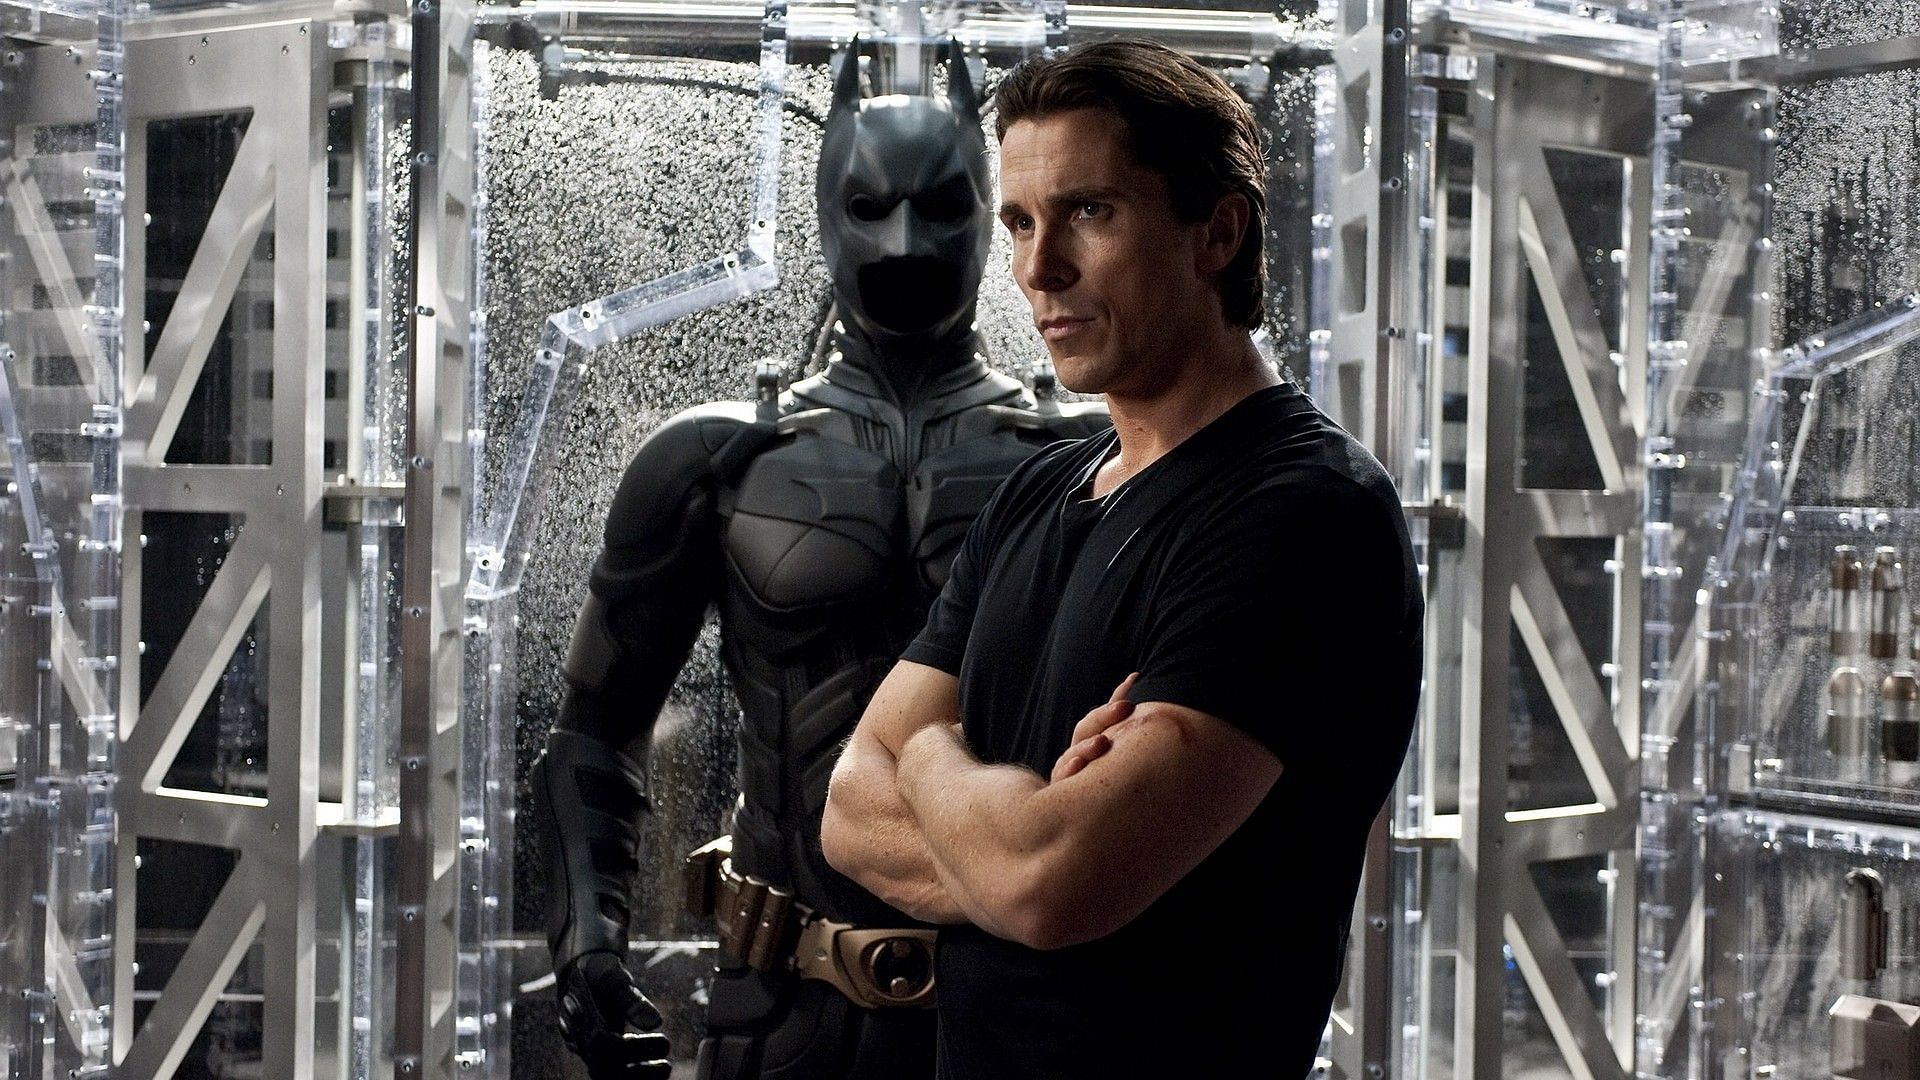 Christian Bale in The Dark Knight Rises (Image via DC)